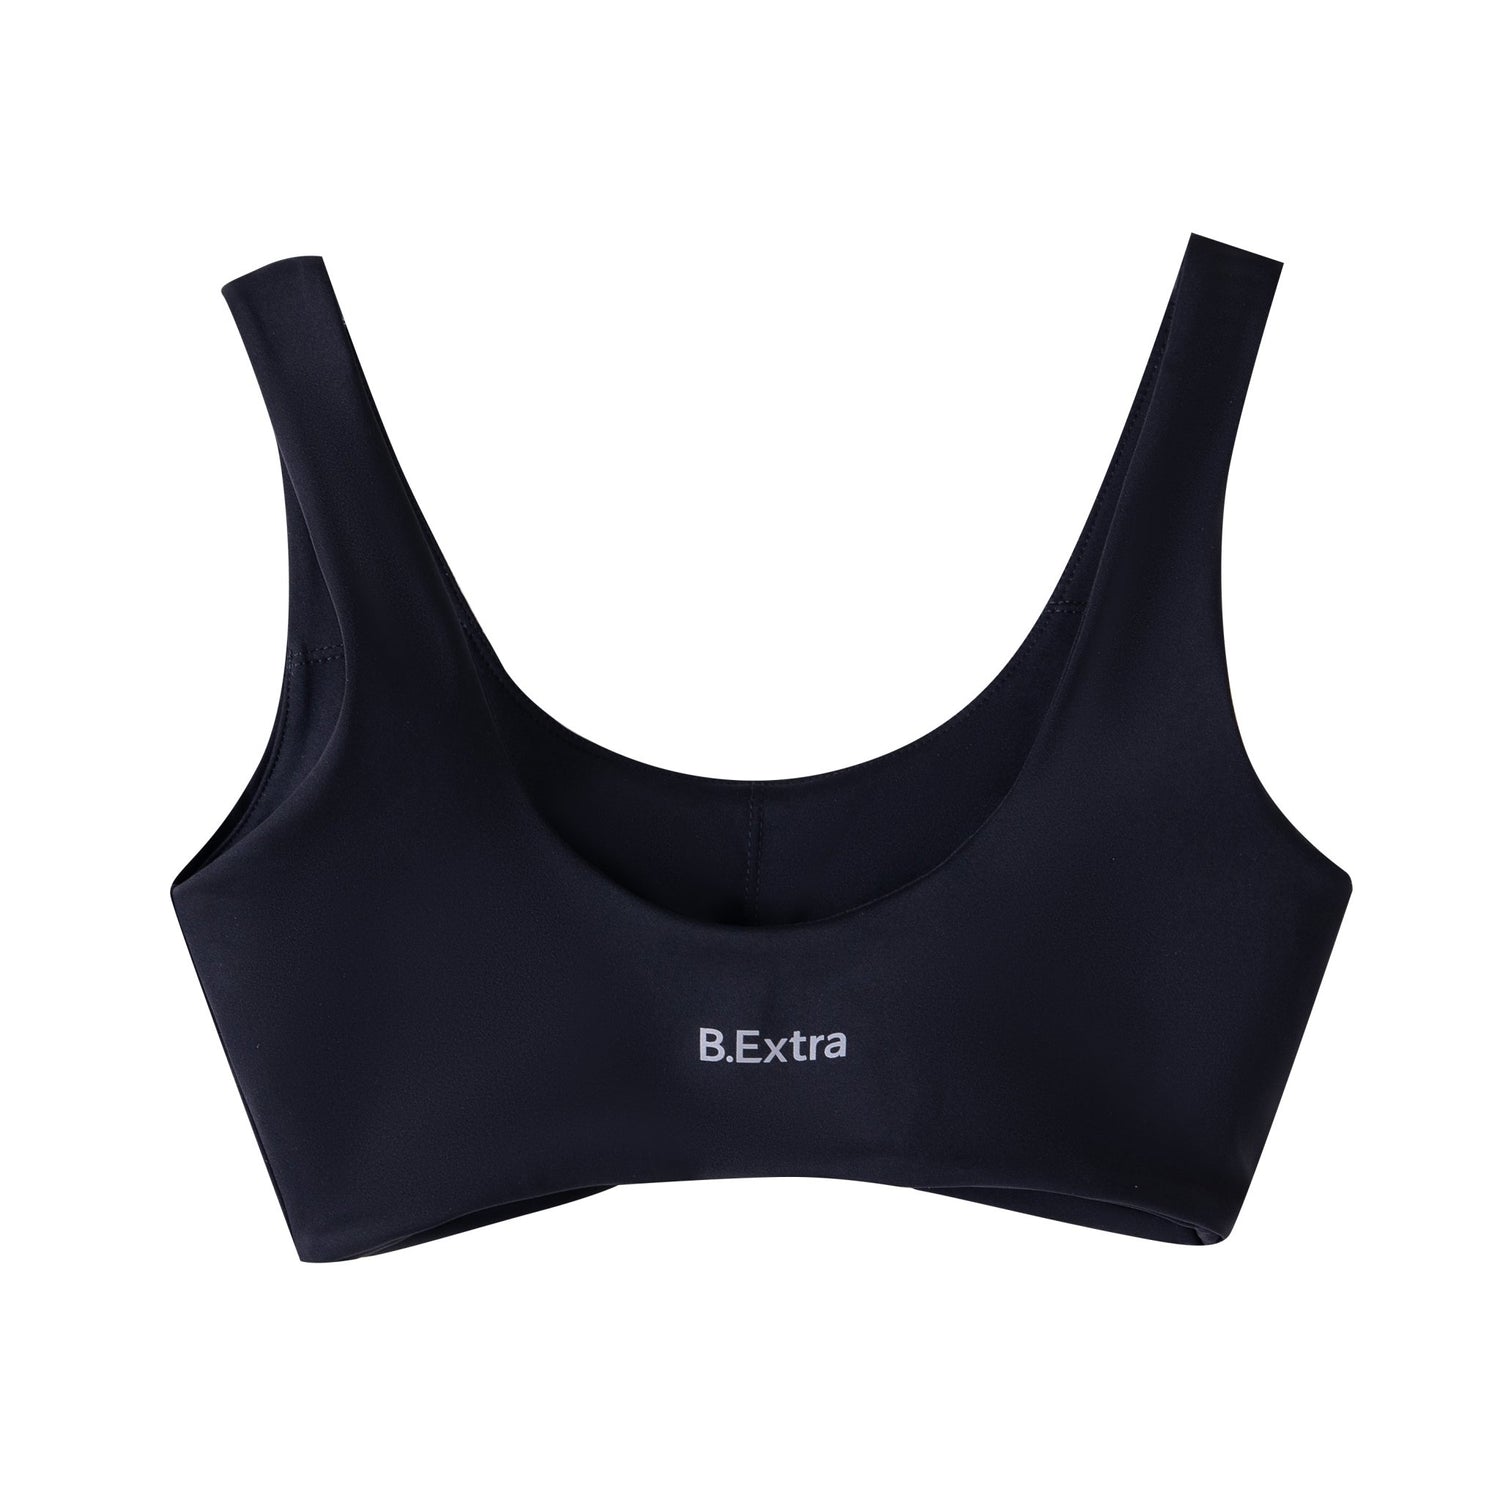 Blossom Bra - Black | Black sports bra | B. Extra Sportswear